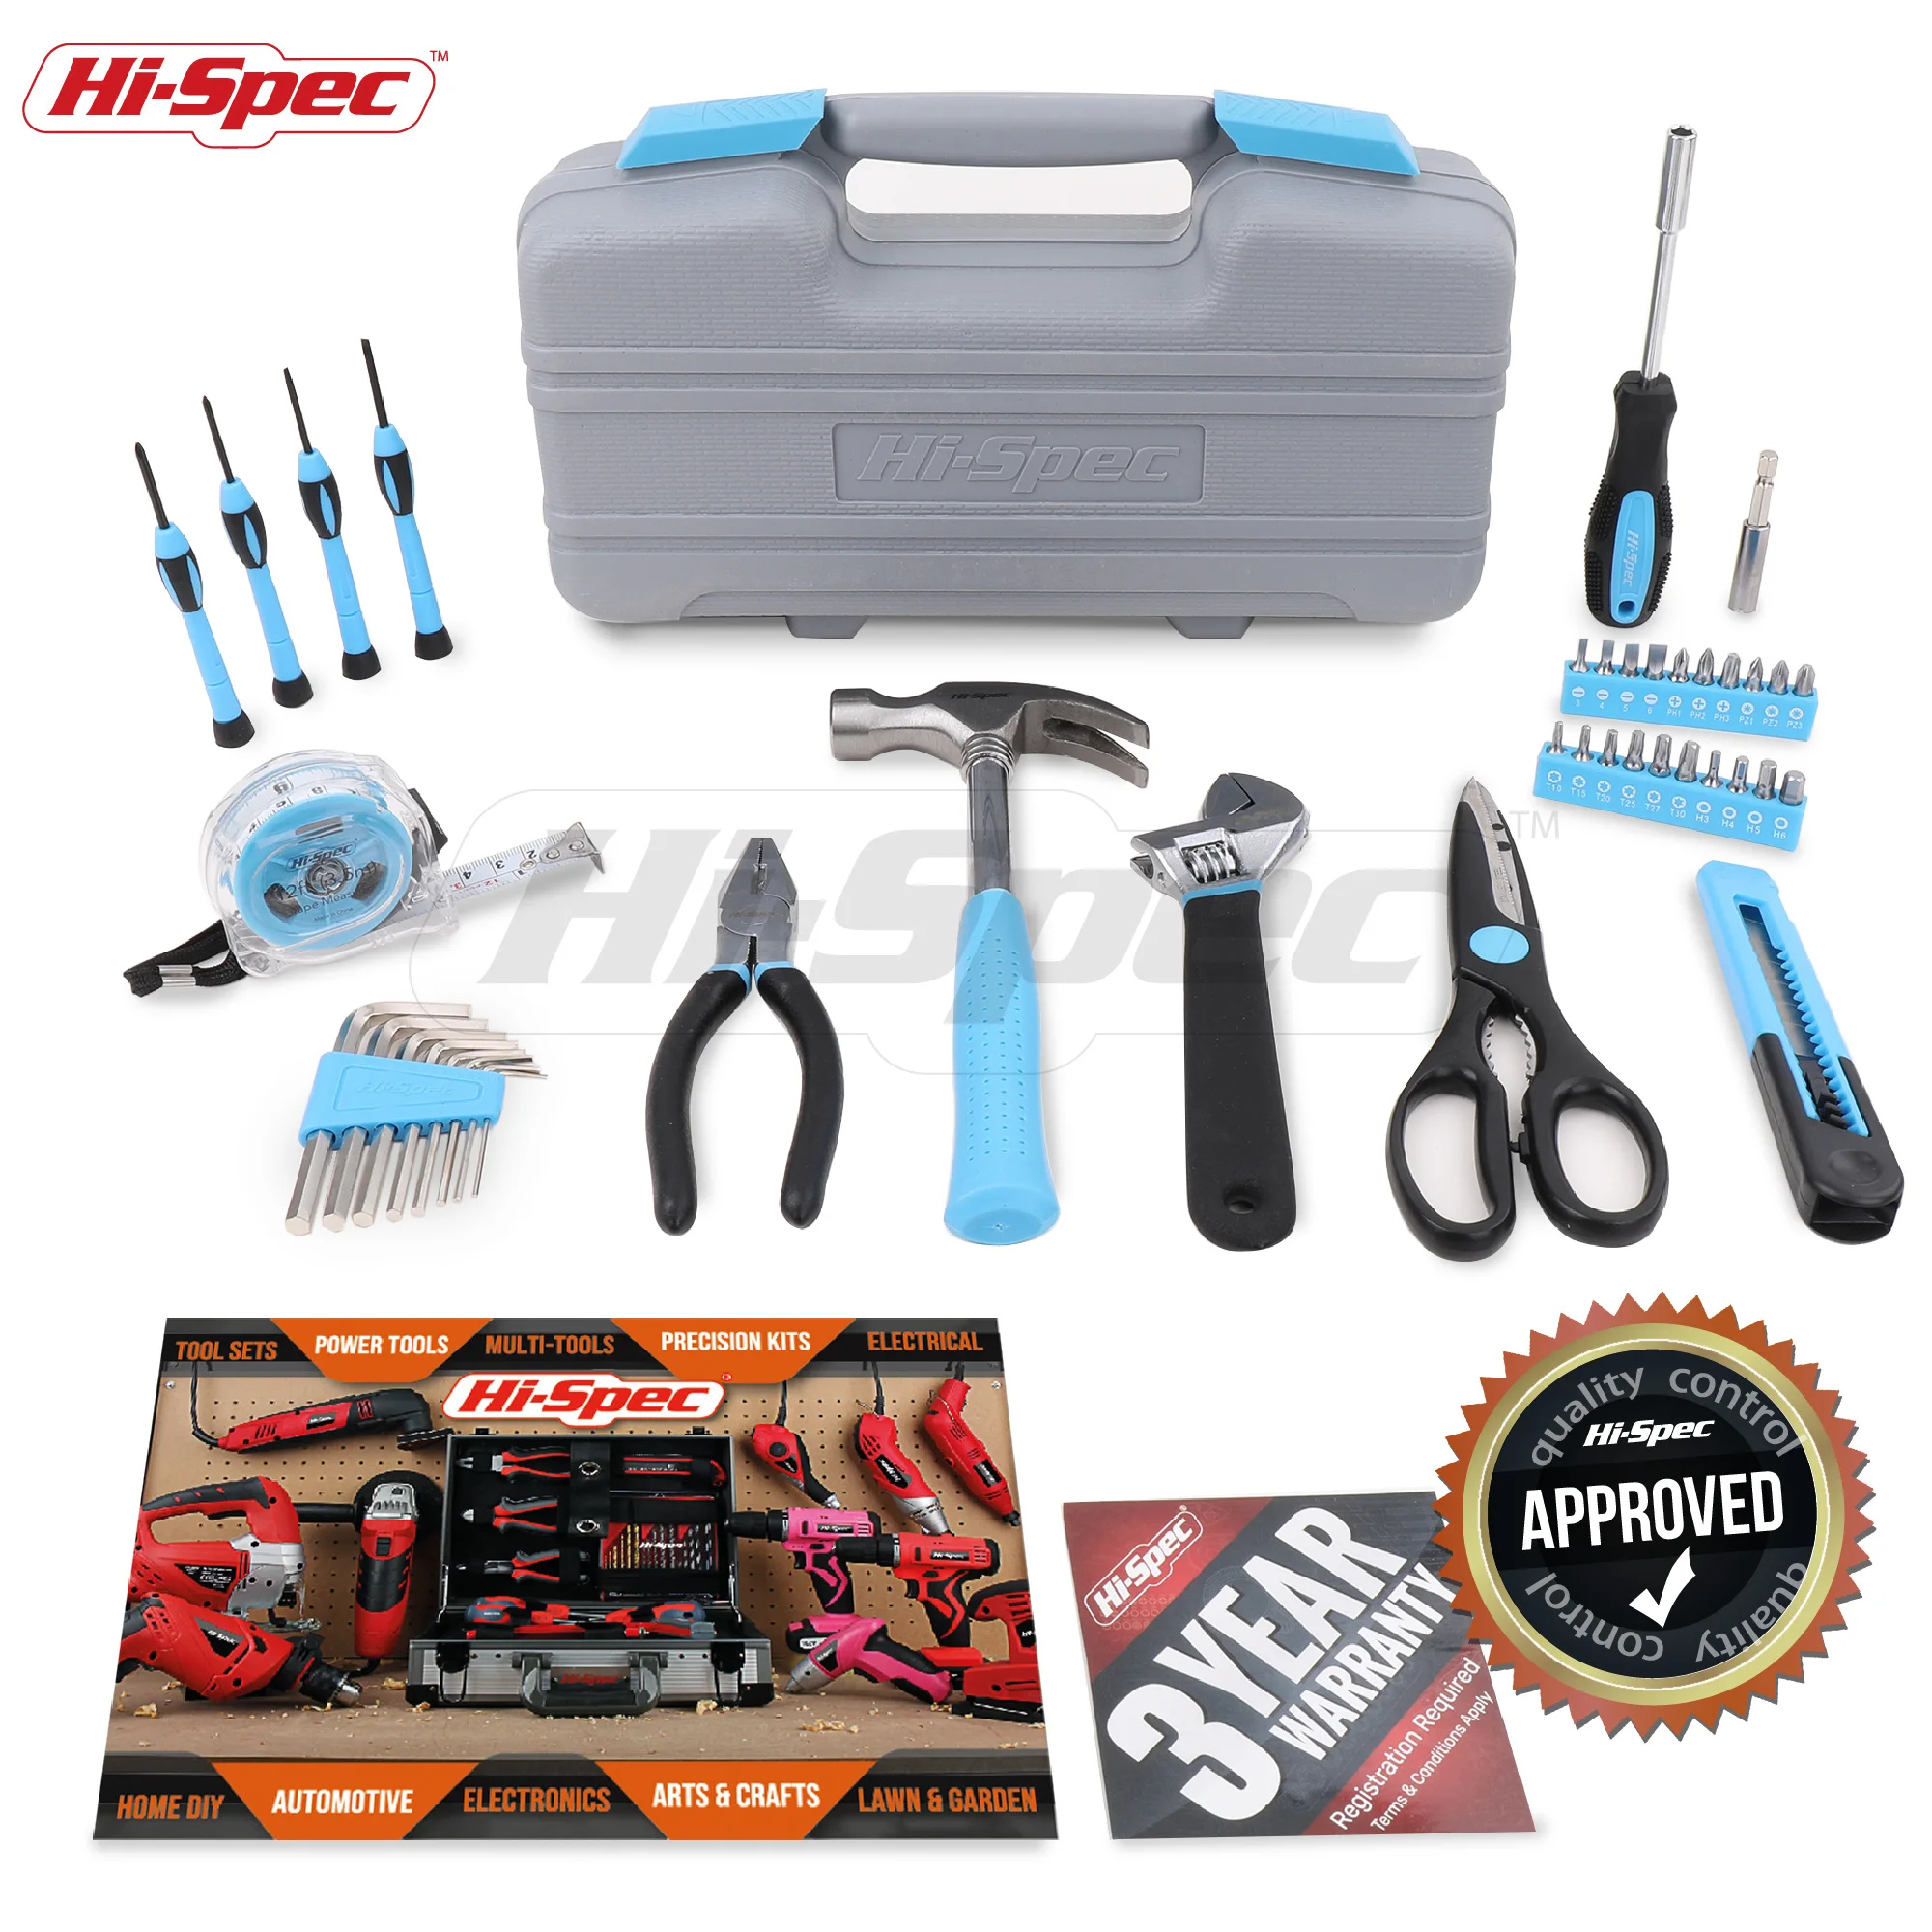 

Hi-Spec 40pc Home Repair Hand Tool Set General Household Tool Kit Basic DIY Tool Kit Sets with Toolbox Pliers Screwdriver Set